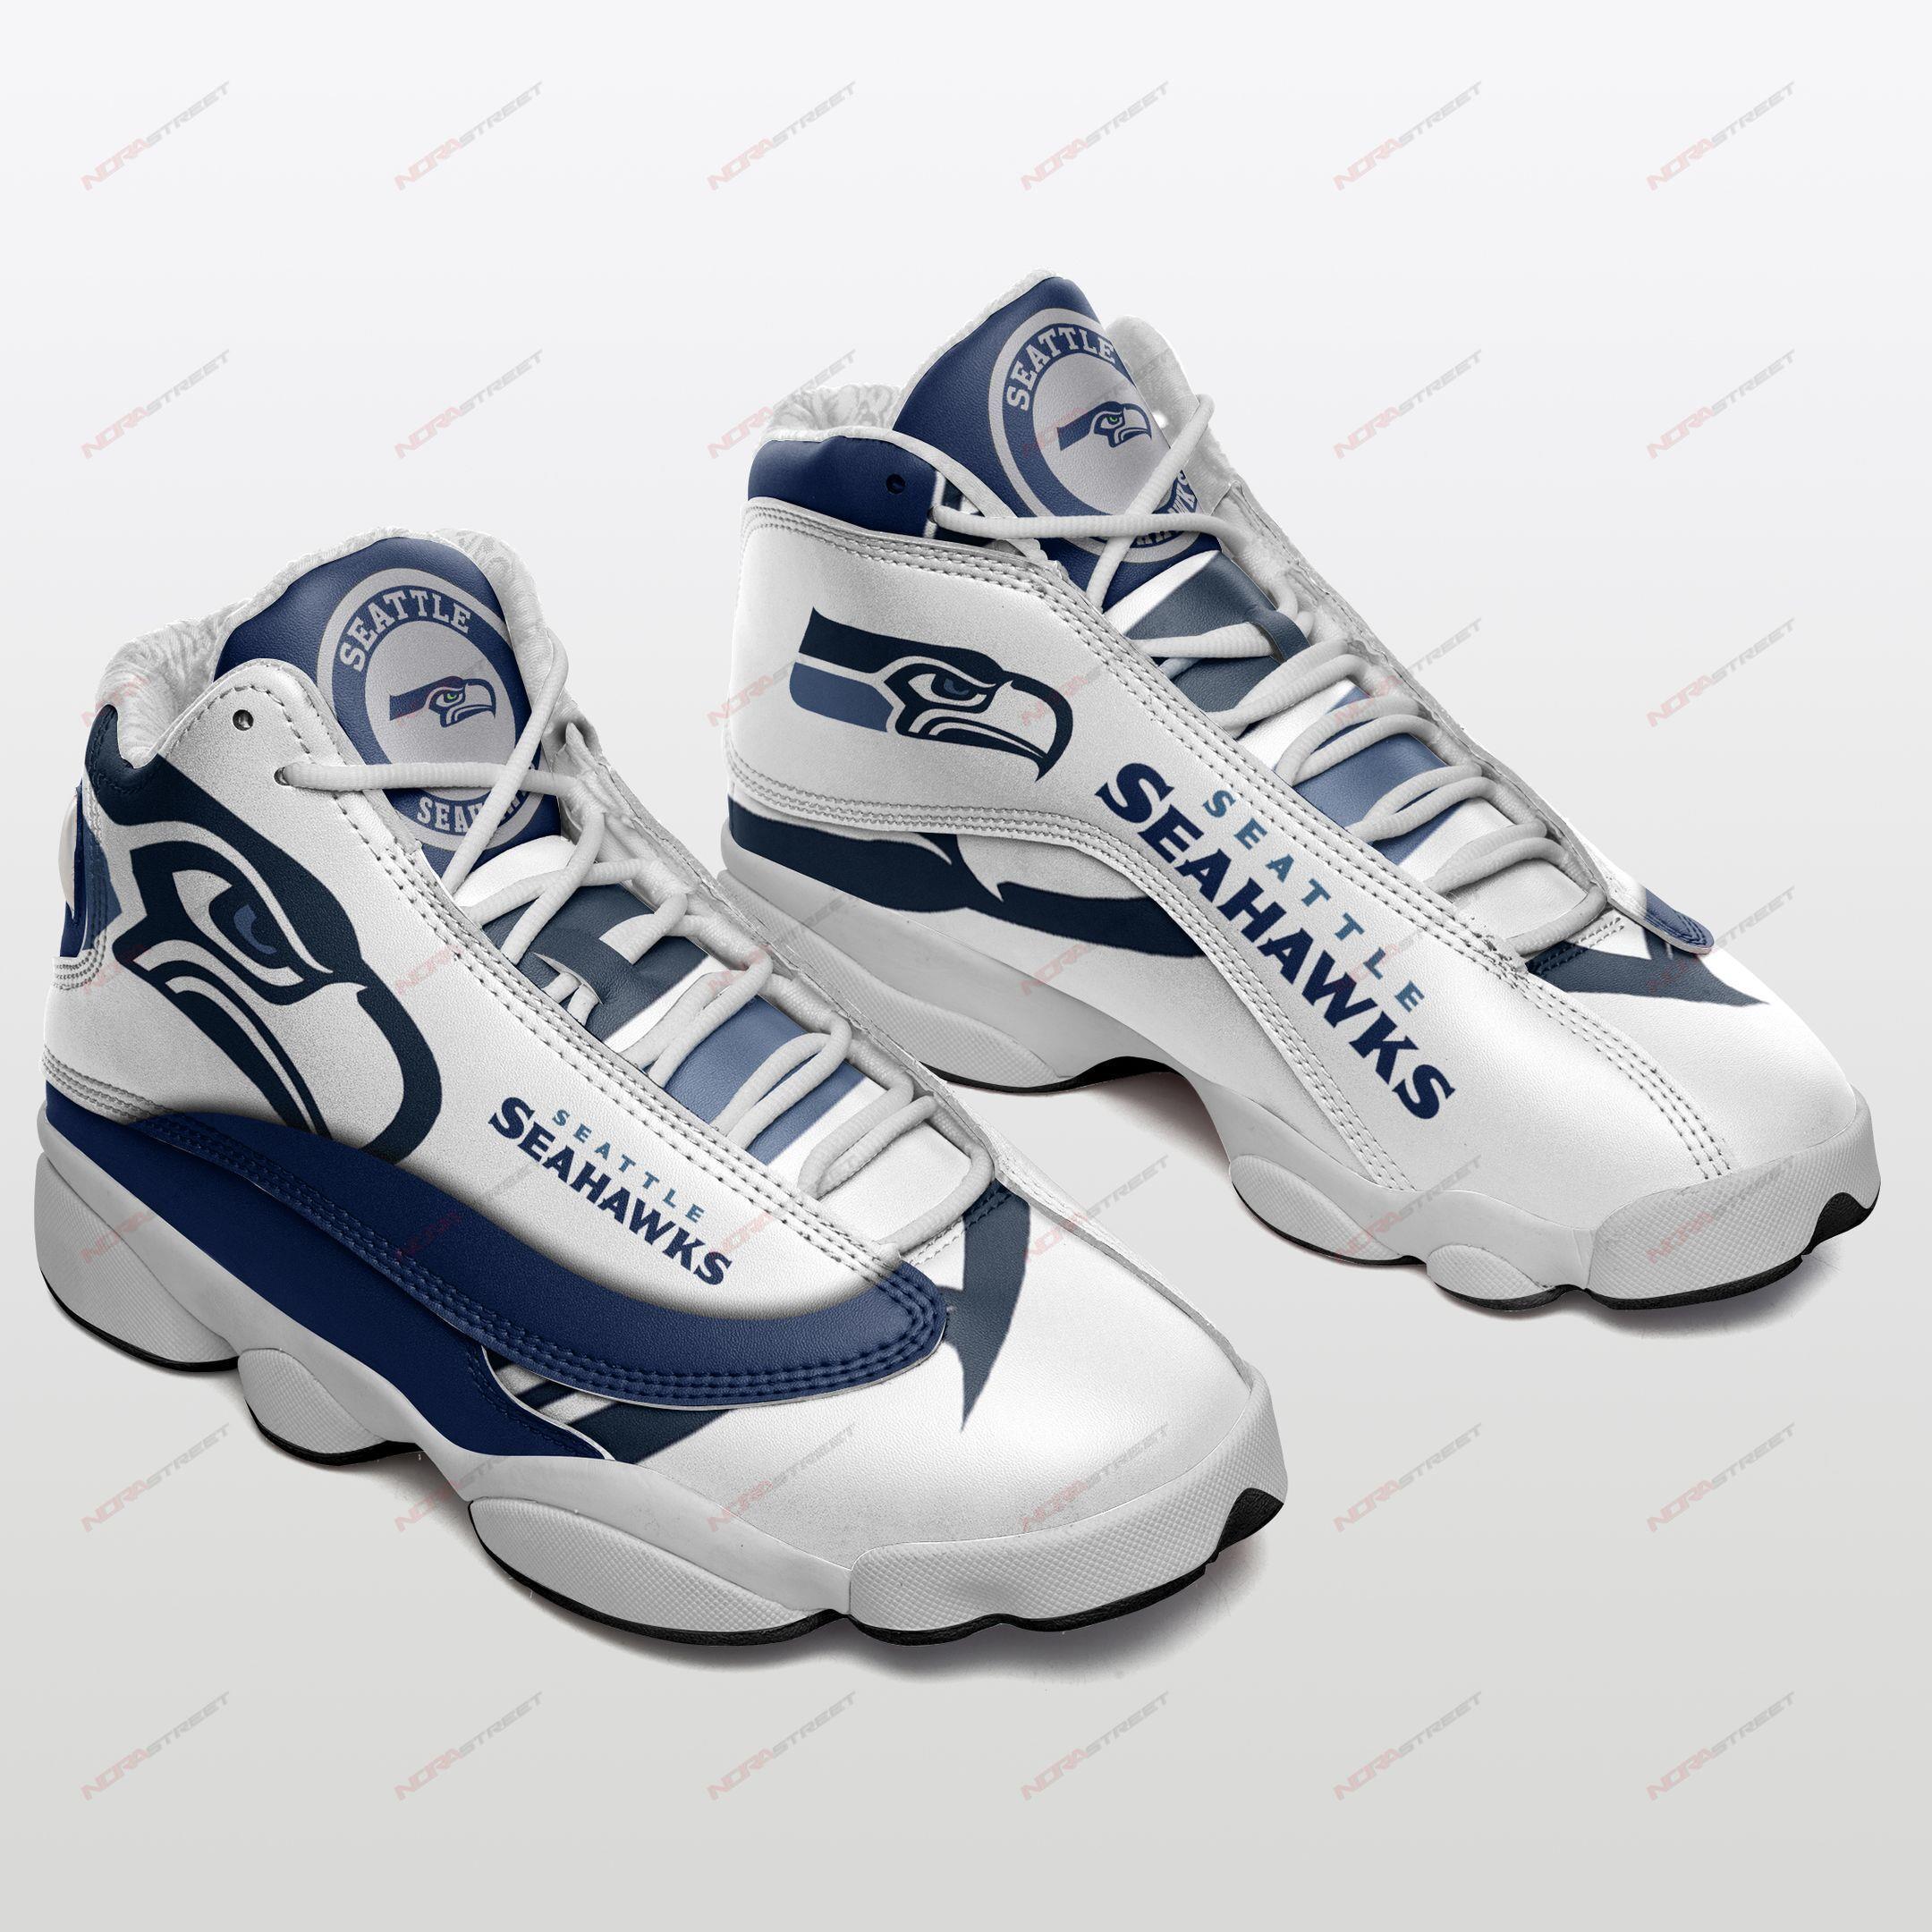 Seattle Seahawks Air Jordan 13 Sneakers Sport Shoes